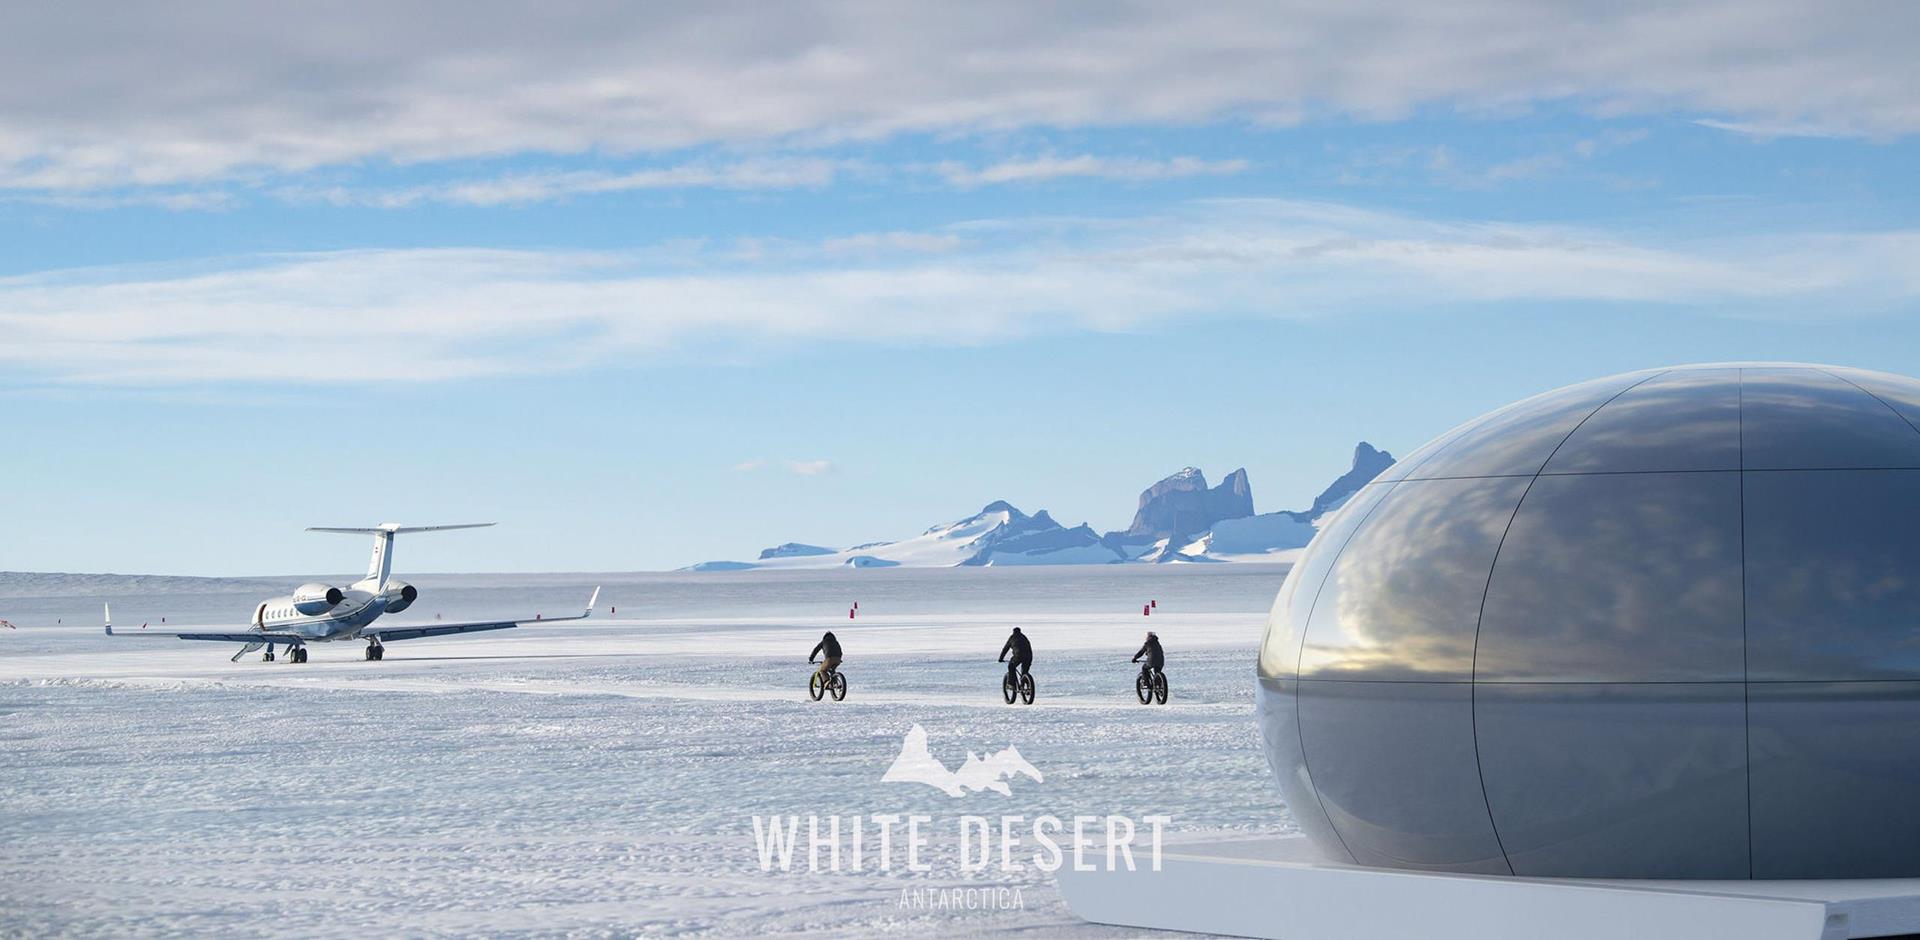 Echo Camp, Antarctica ©WhiteDesertAntarctica